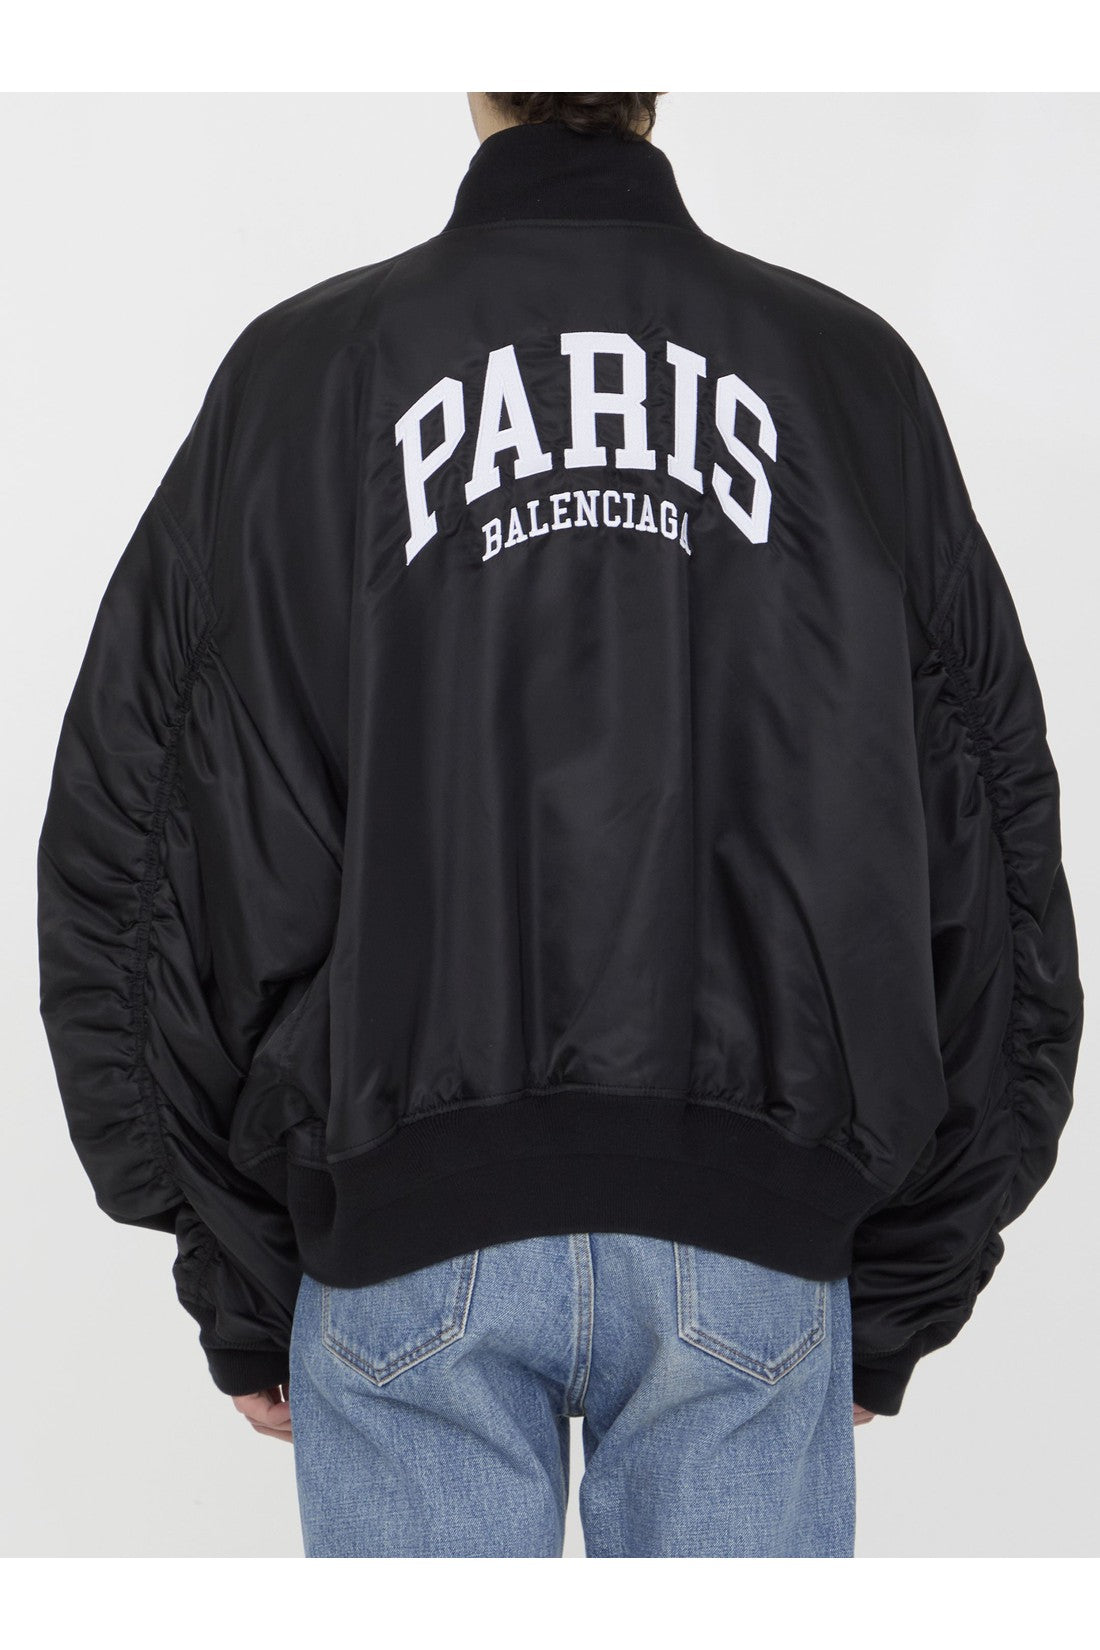 Paris Balenciaga Varsity Jacket